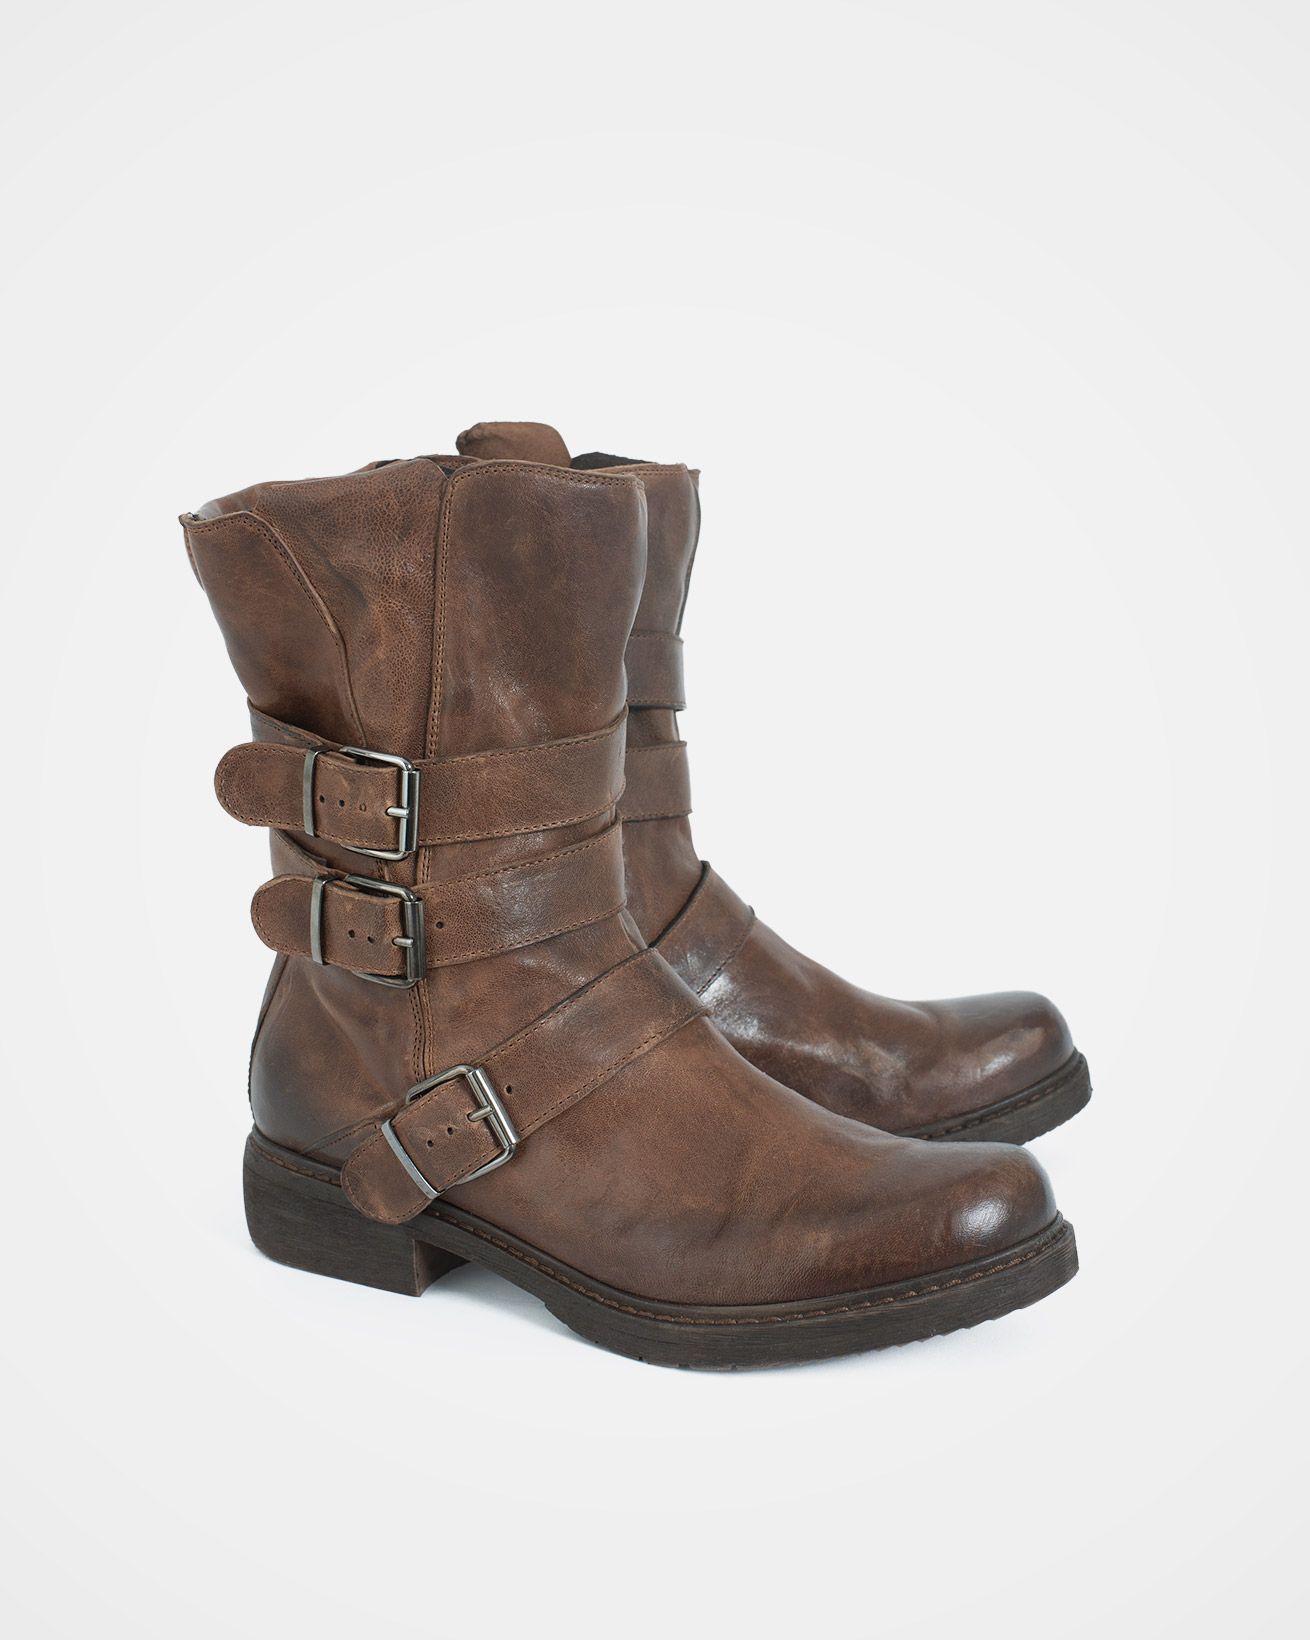 7213_leather-biker-boot_antique-brown_pair.jpg